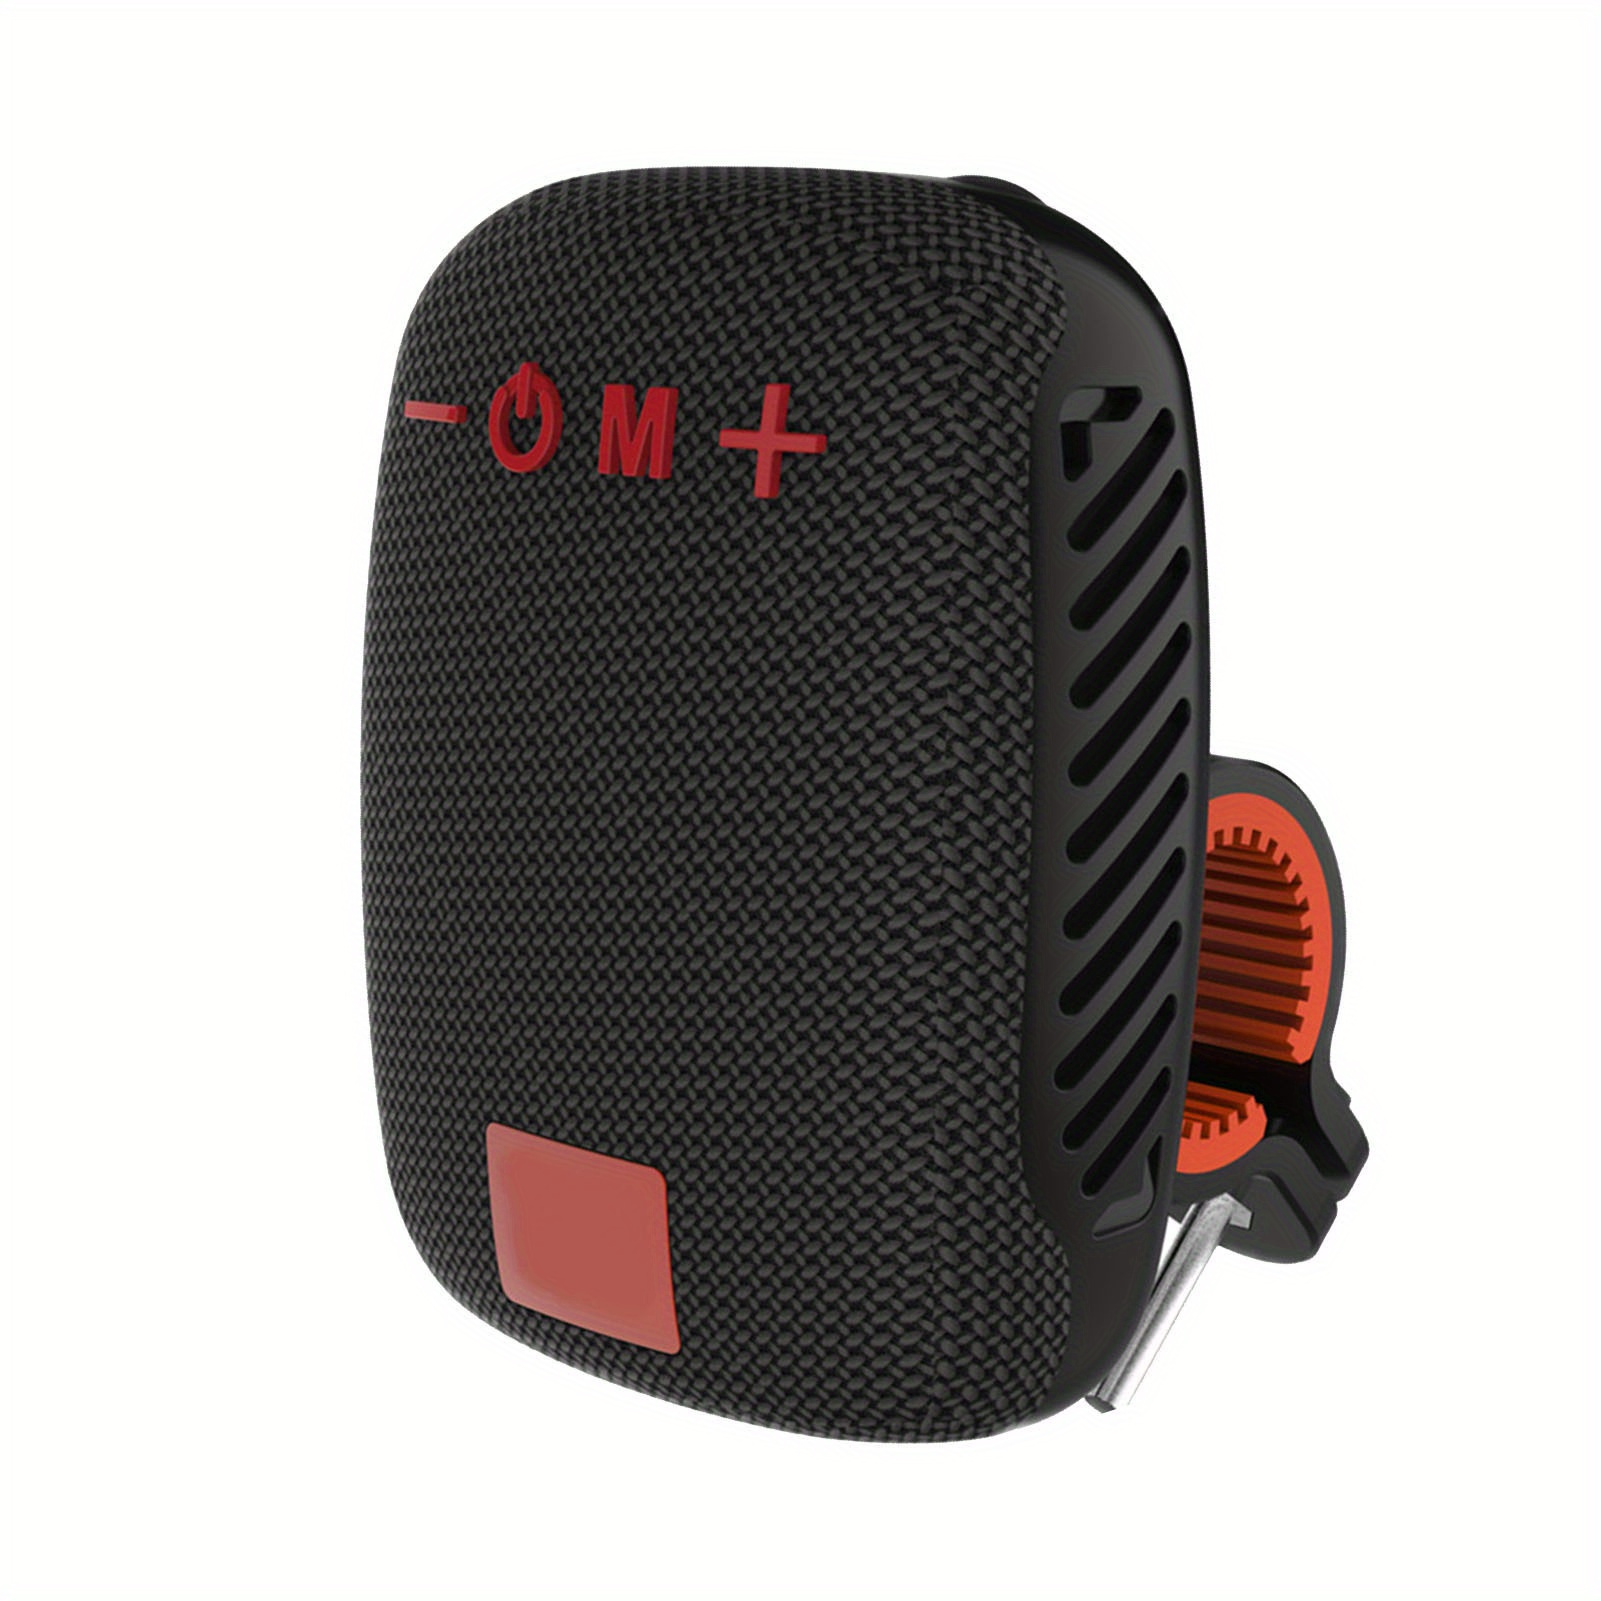 

Bike Speaker Portable Pairing Fm Radio Memory Card Support Speaker For Sports Companionship Cycling Hiking Travel Run Black